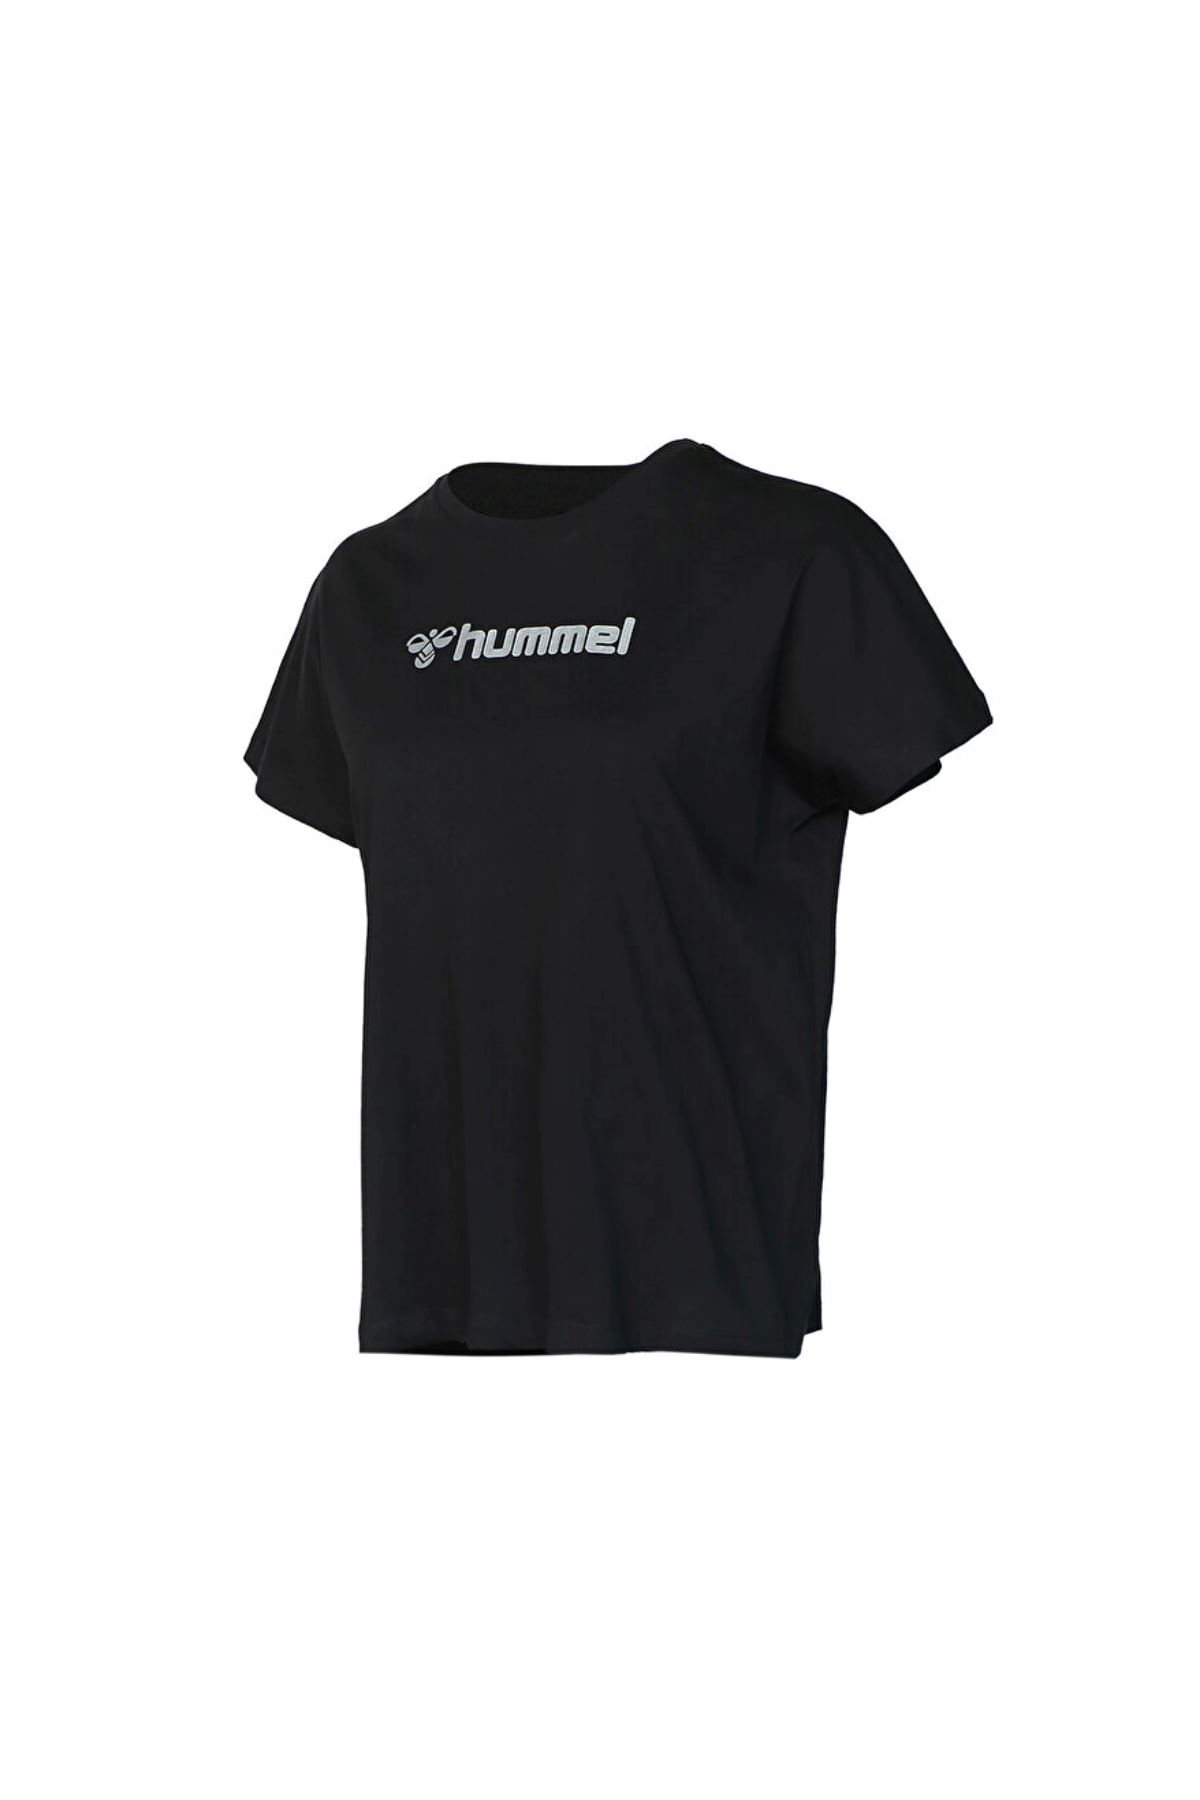 Hummel Hmlarwıd Kadın Siyah Tişört - 911636-2001